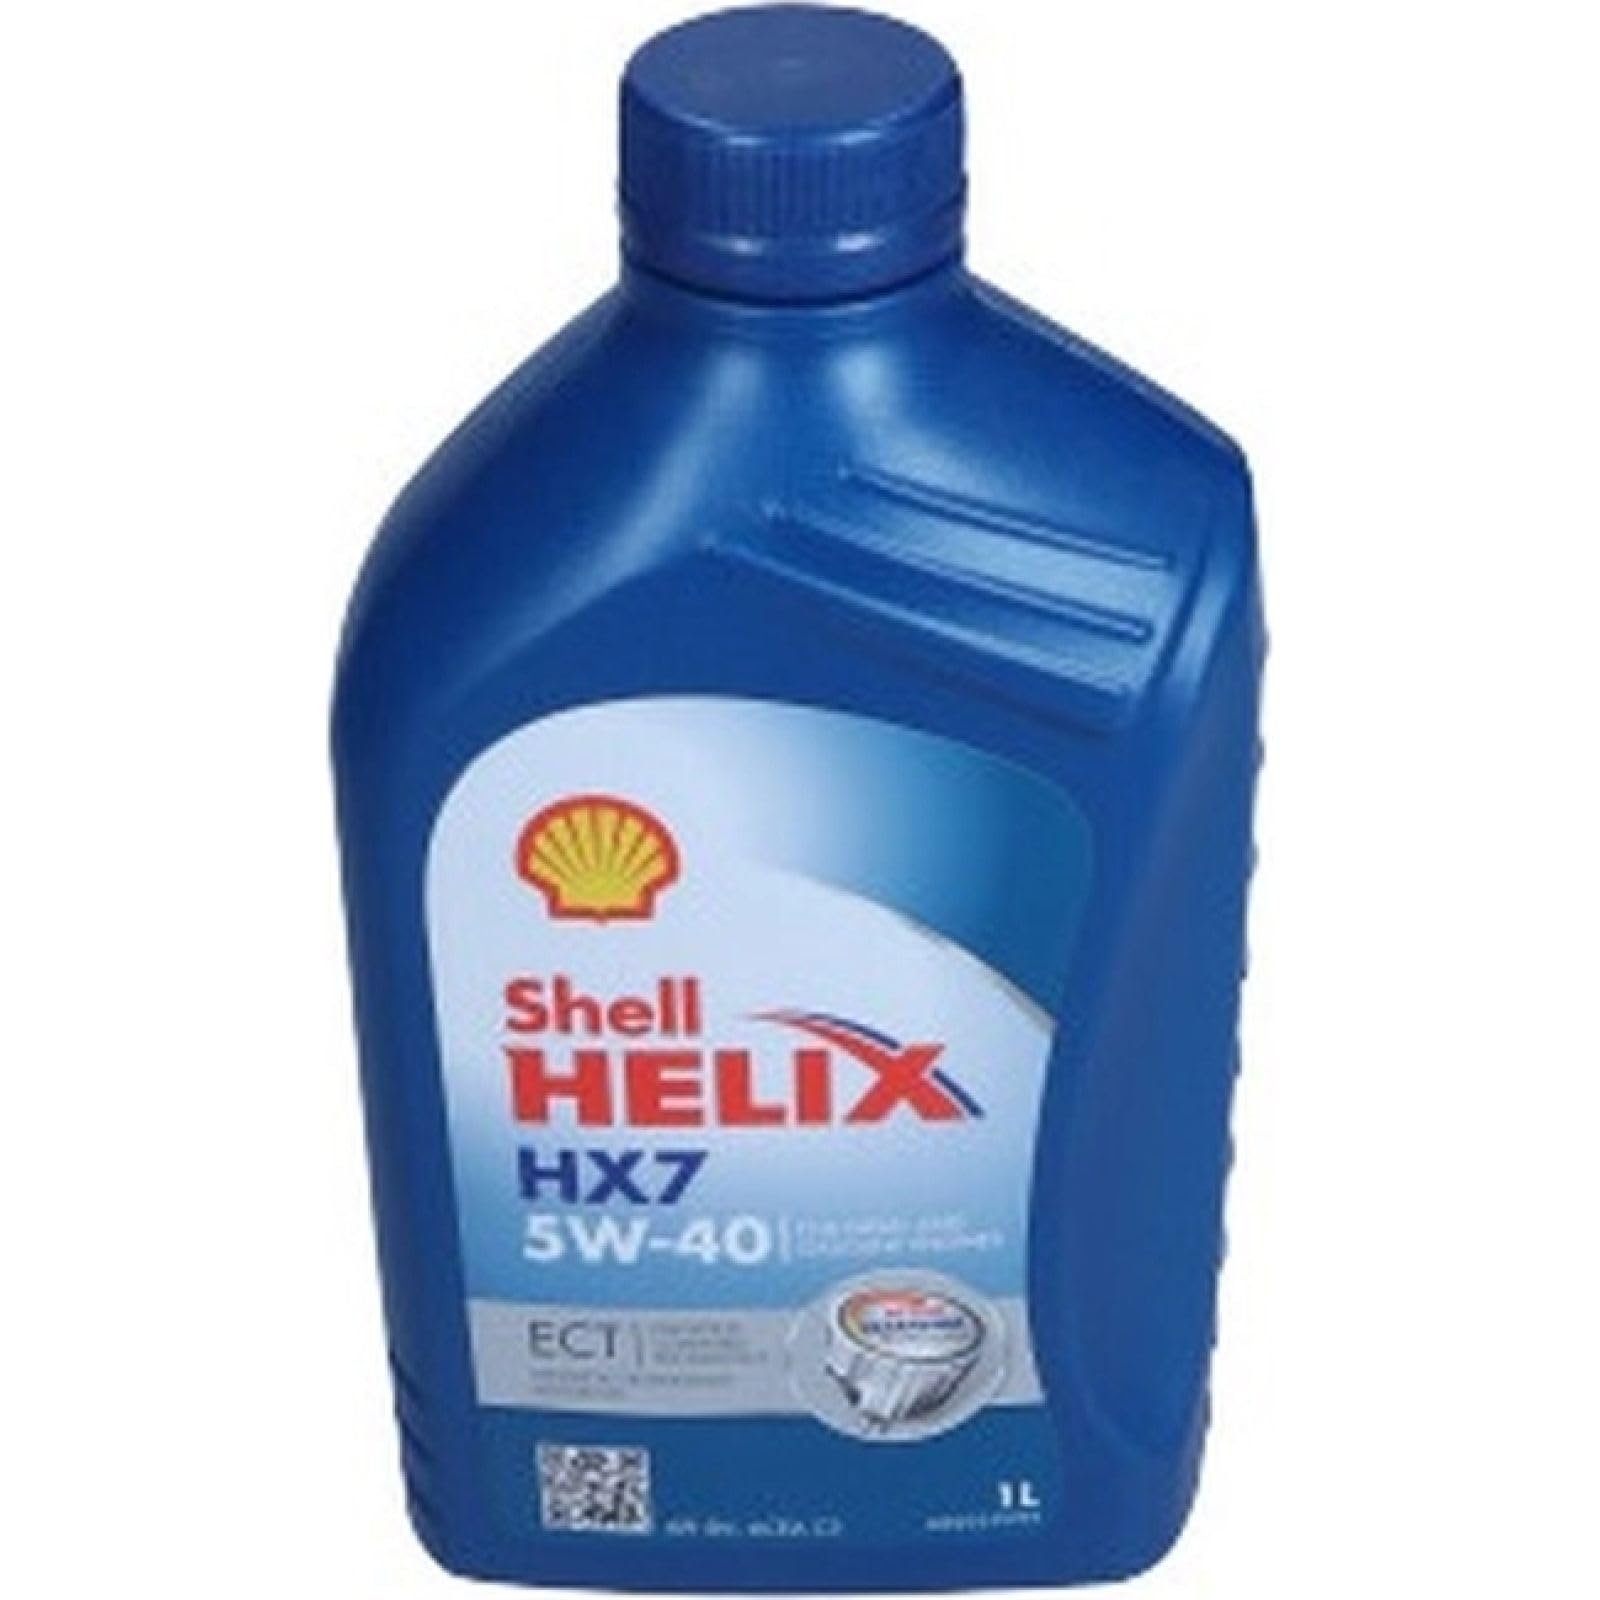 Shell Motoröl Helix Hx7 5W-40 Motor Engine Oil 550040330 1L von Shell